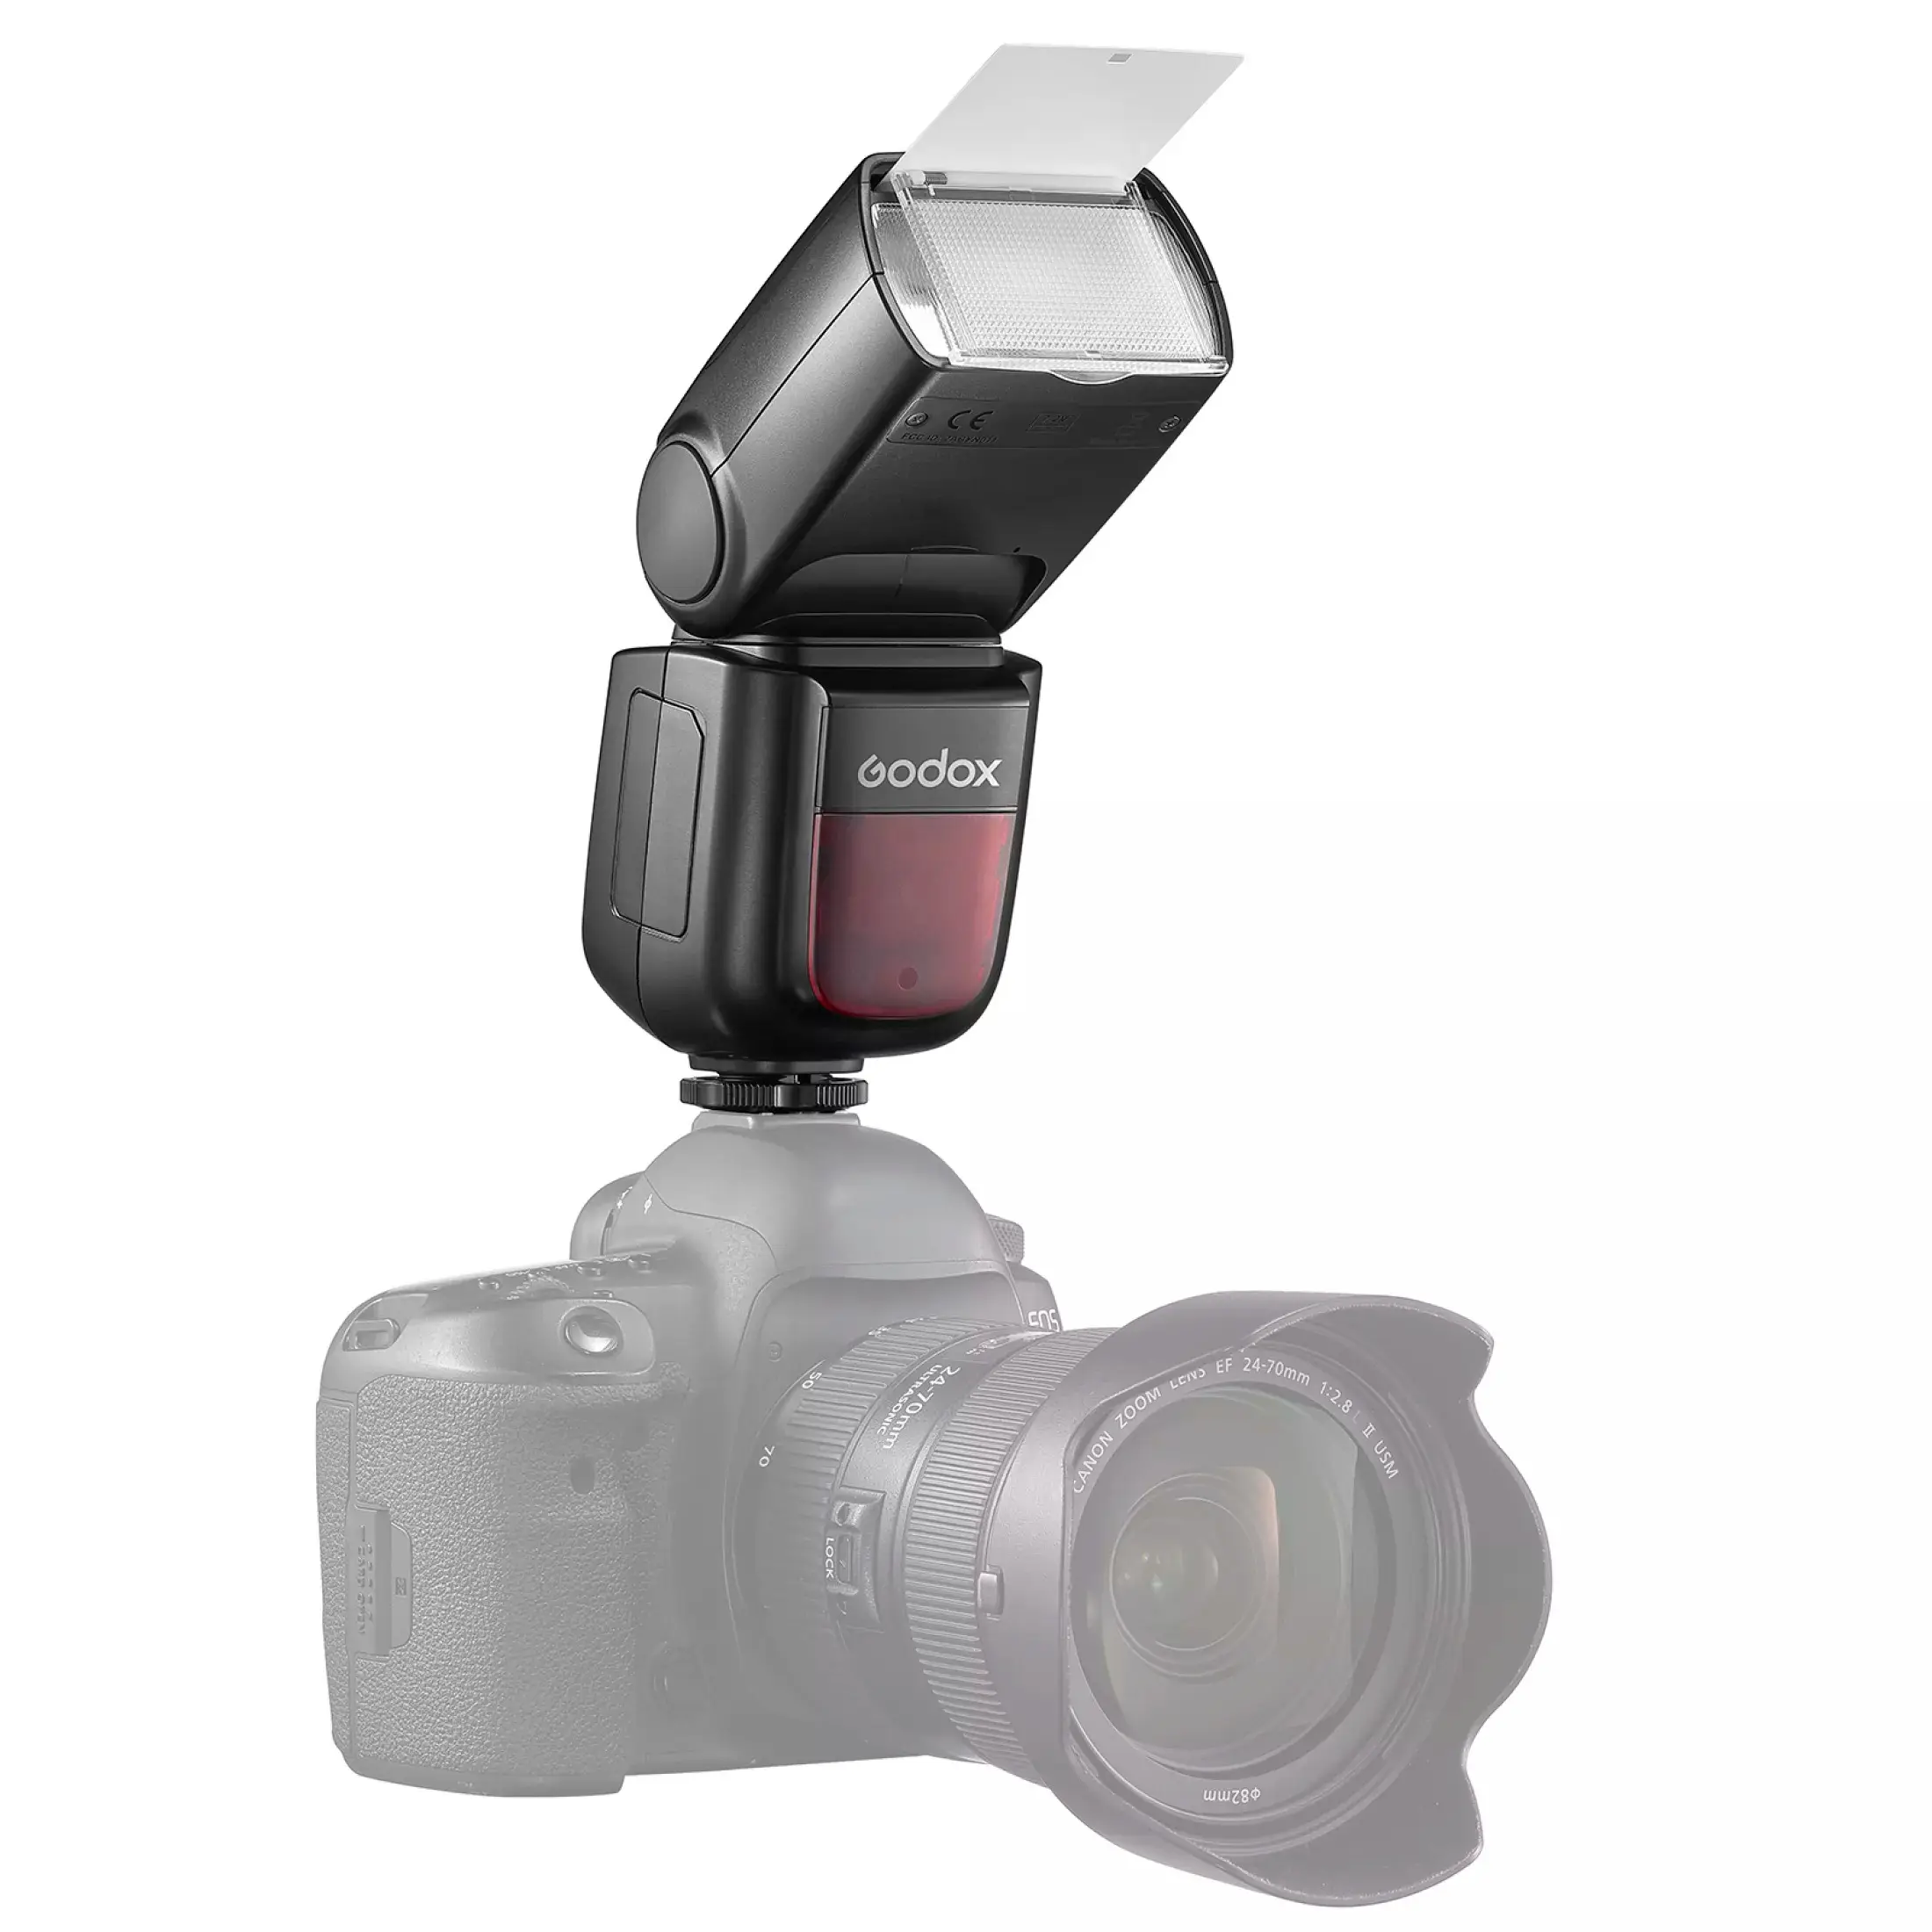 Camera Flash Lights Godox V850III 2.4G GN60 Li-ionBattery Camera Flash Speedlite for Canon Sony